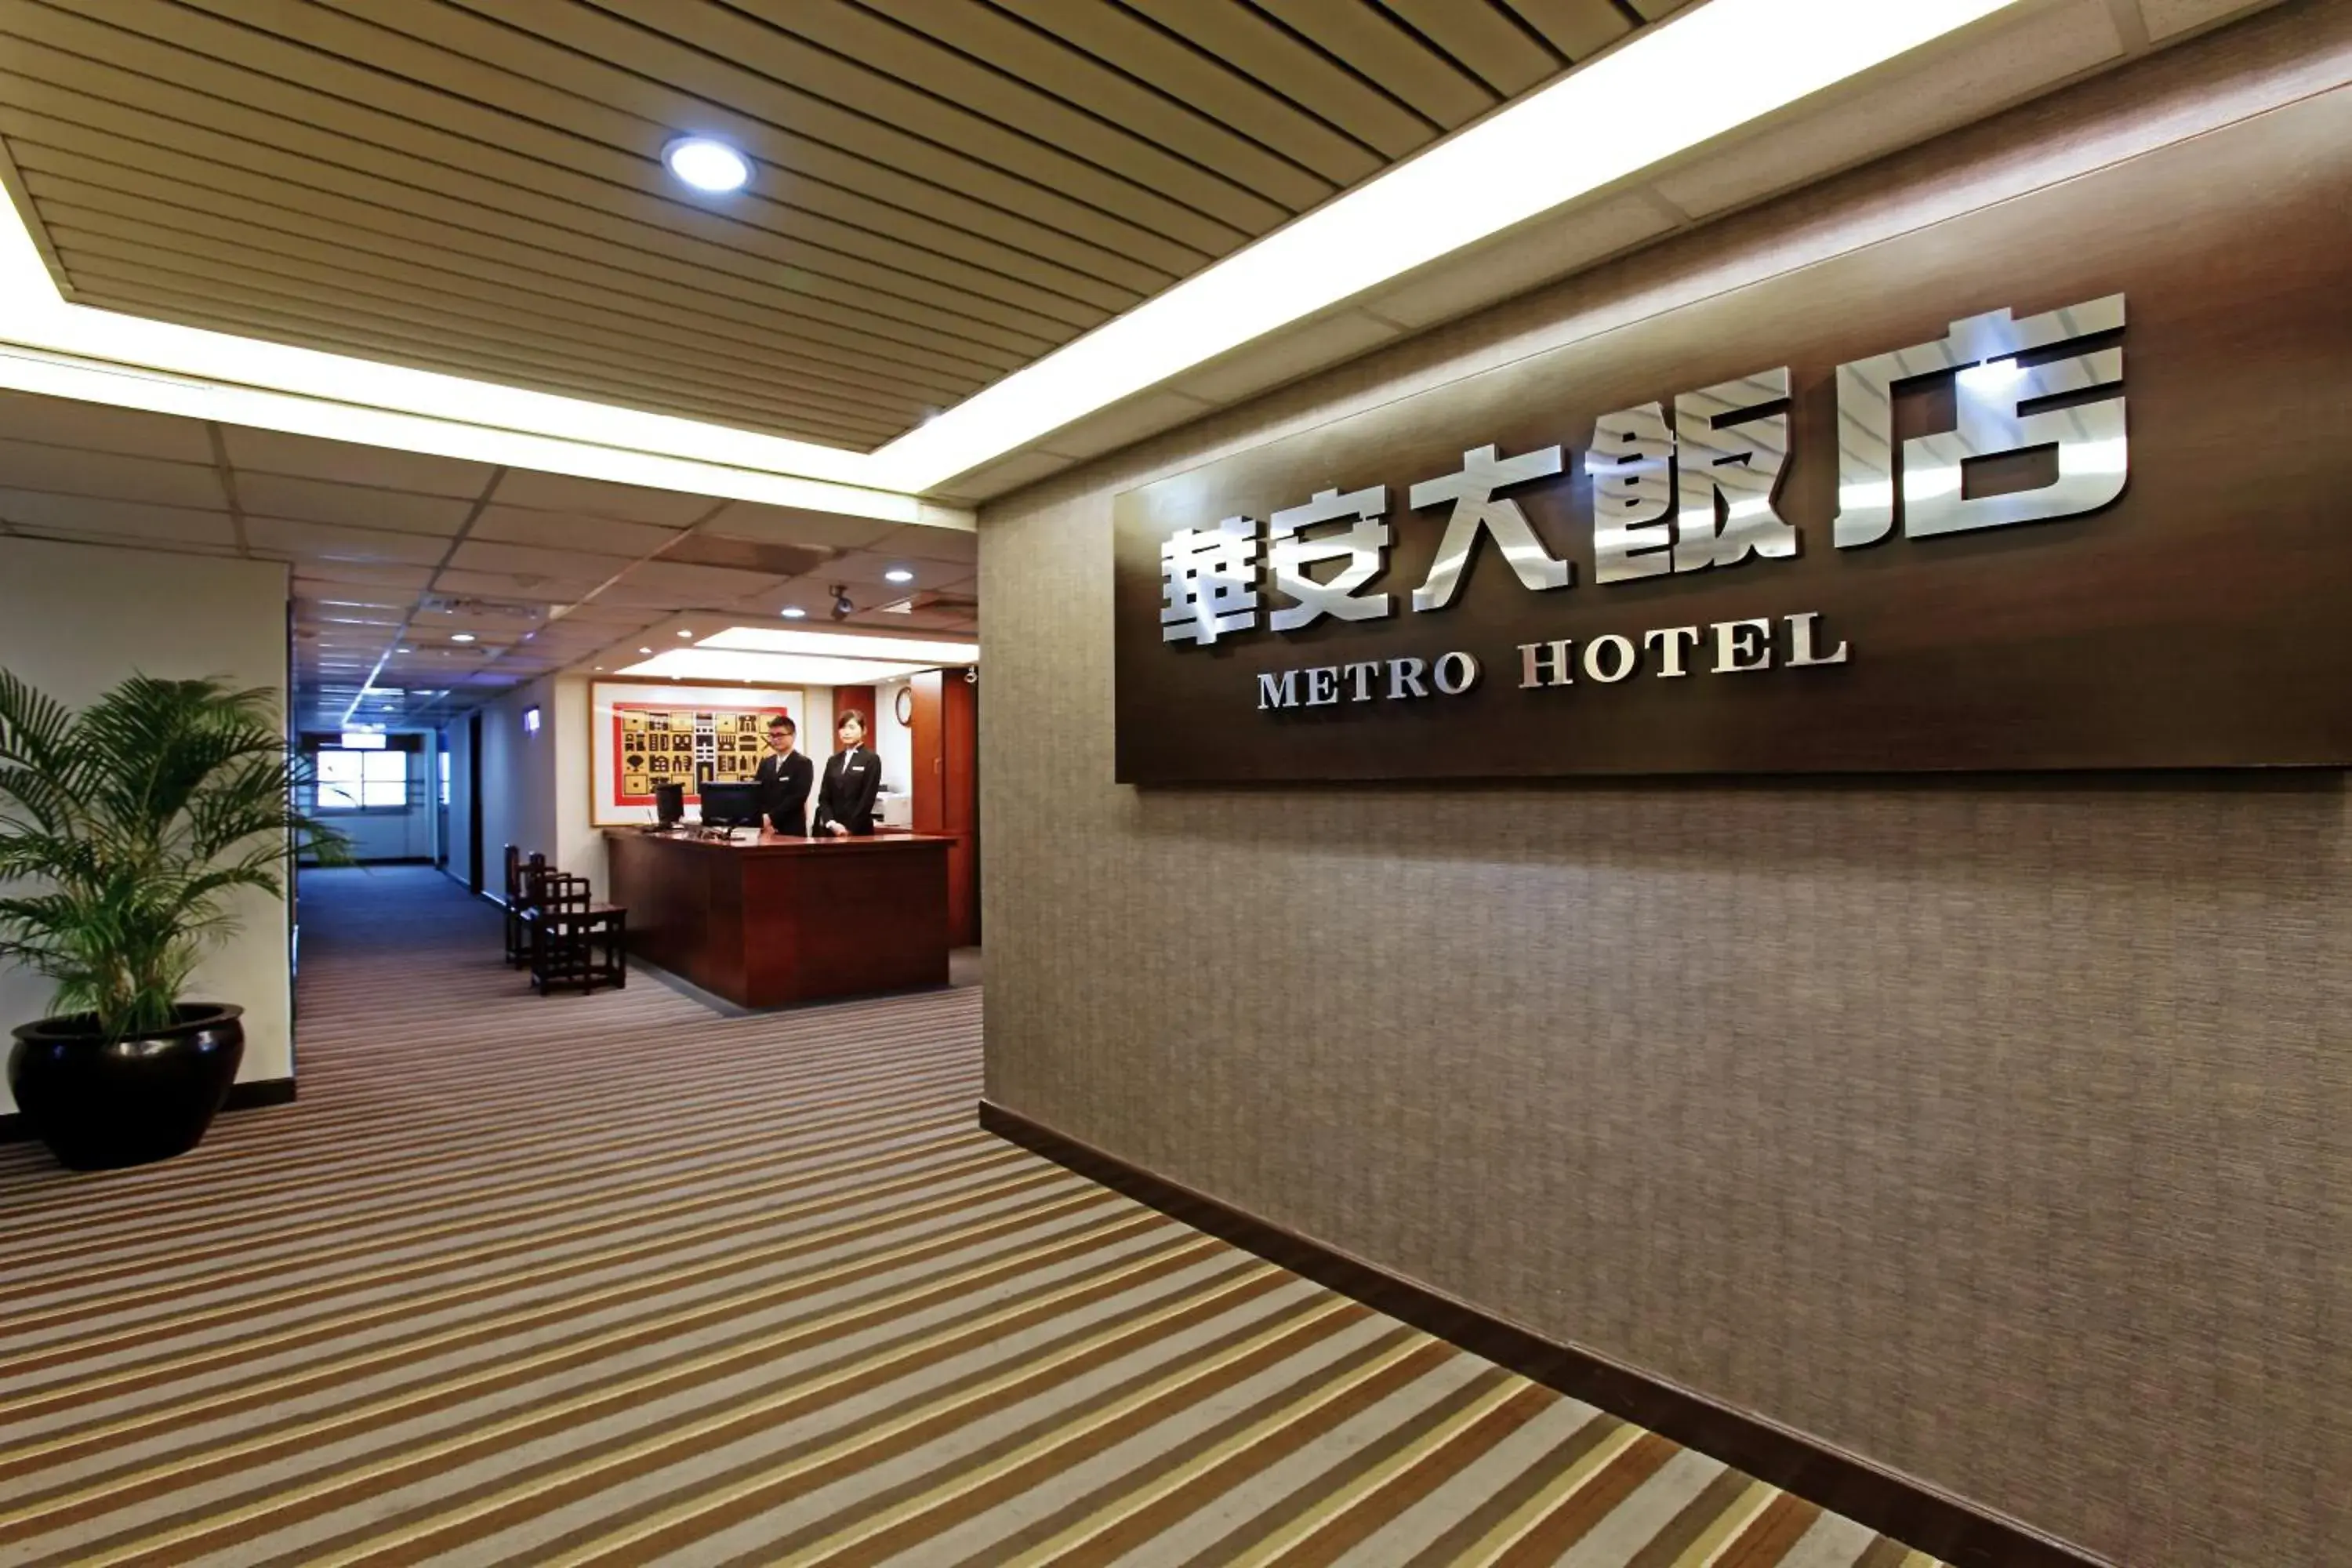 Lobby or reception in Metro Hotel